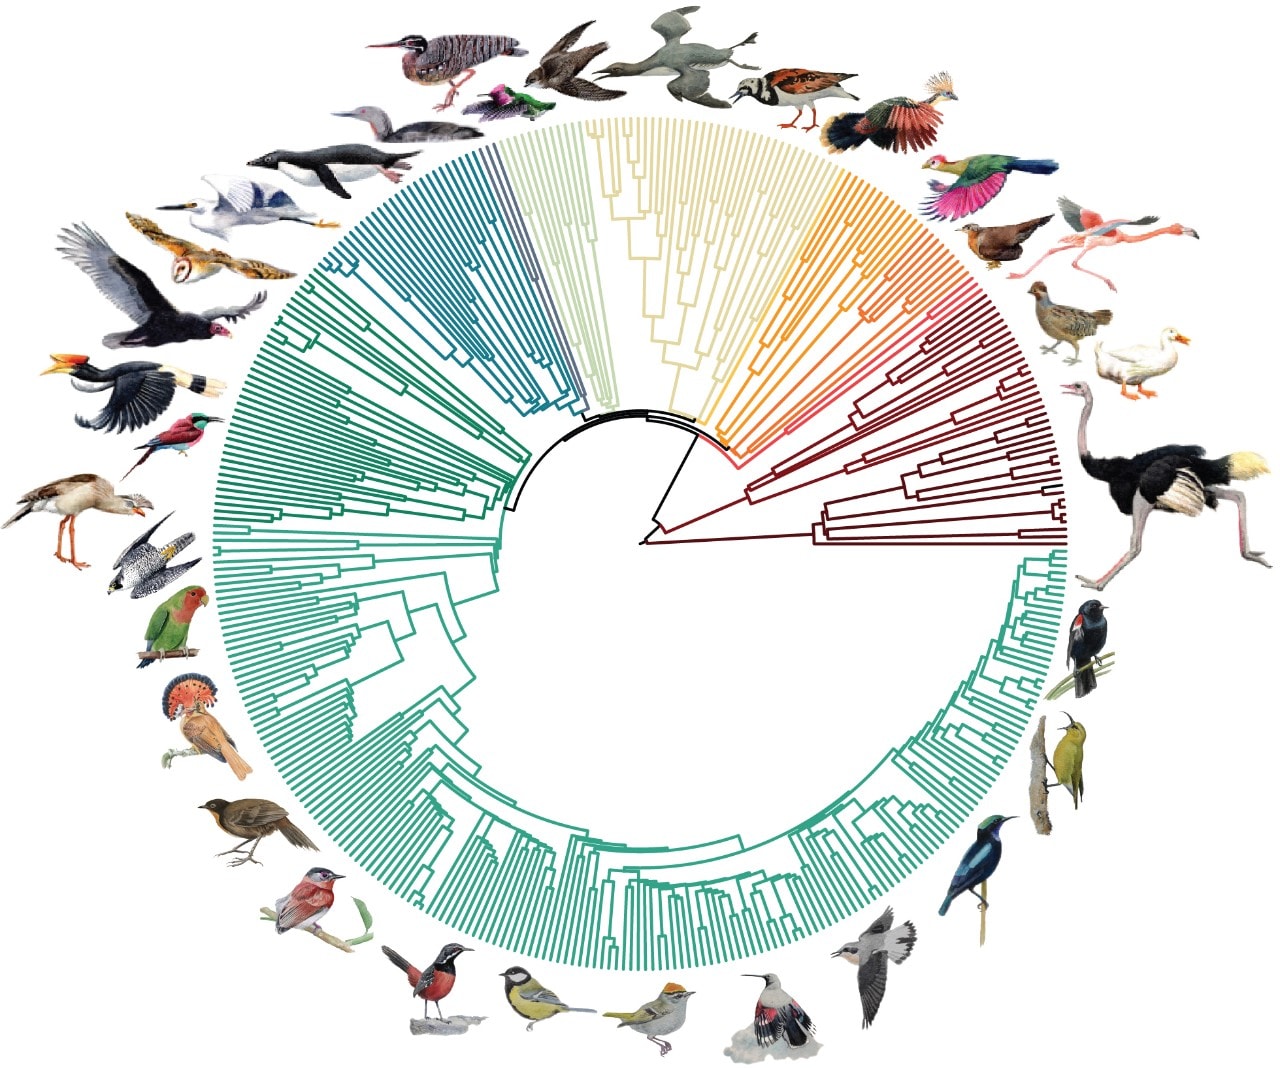 Tree of bird life based on genomes of 363 bird species.